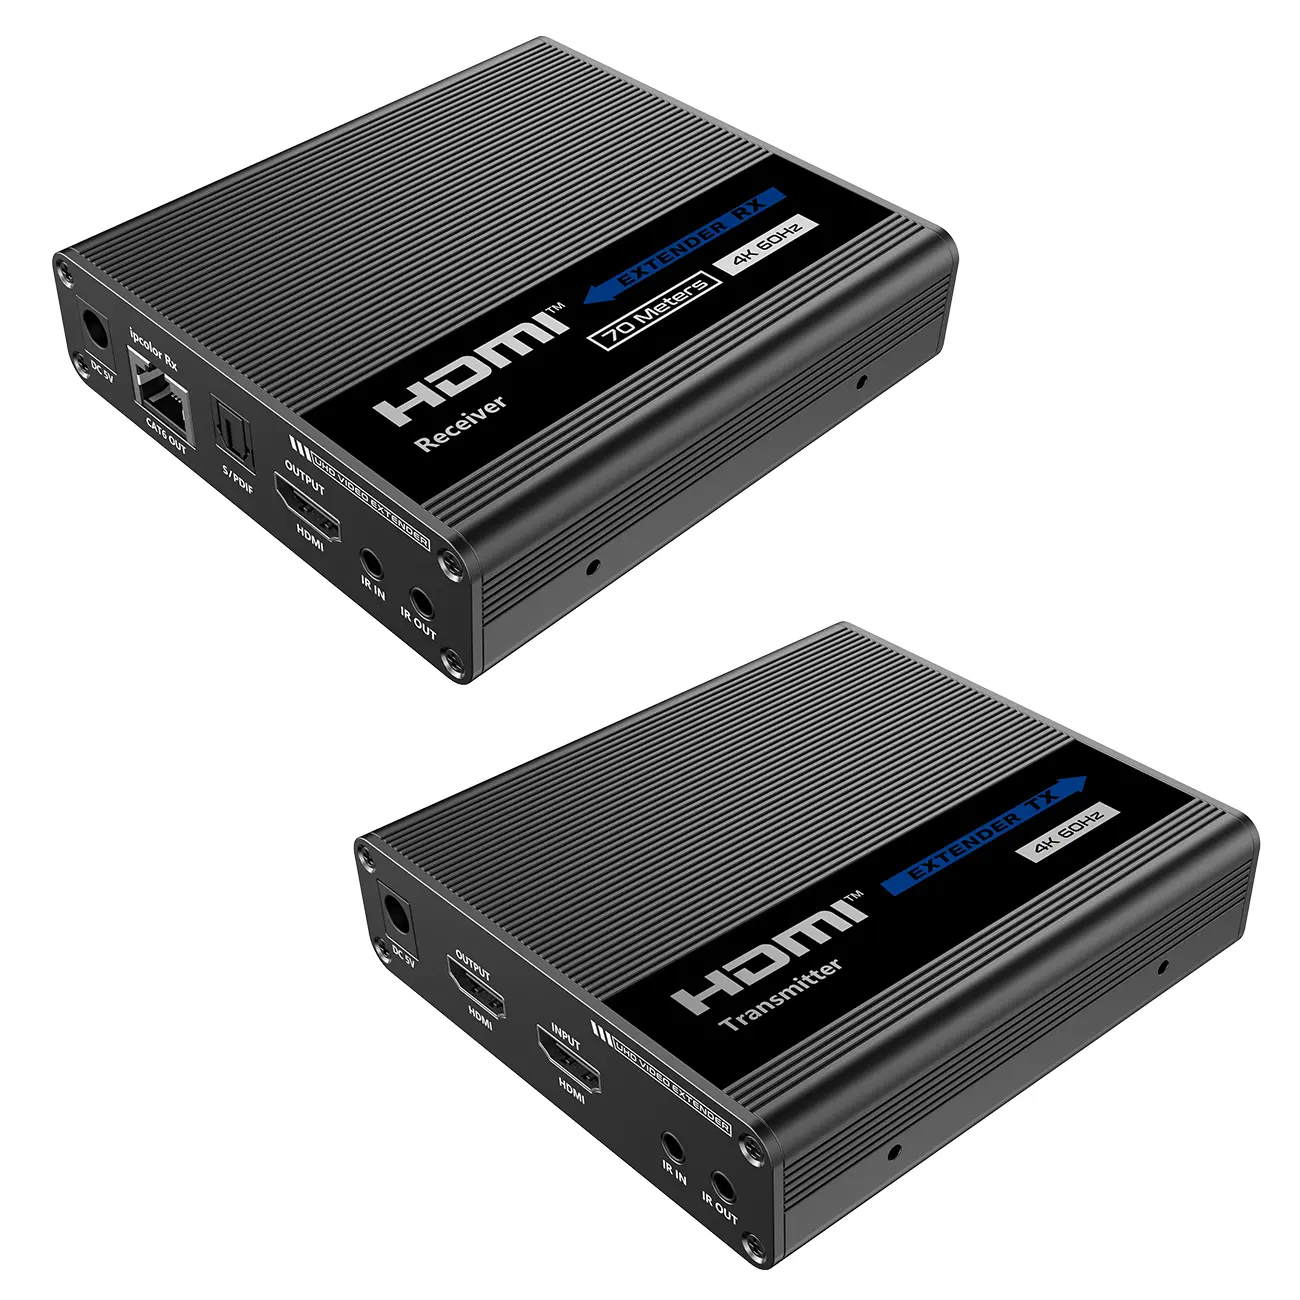  Konwerter HDMI na LAN Kaskada ipcolor 4K Spacetronik IP SPH-676C Zestaw